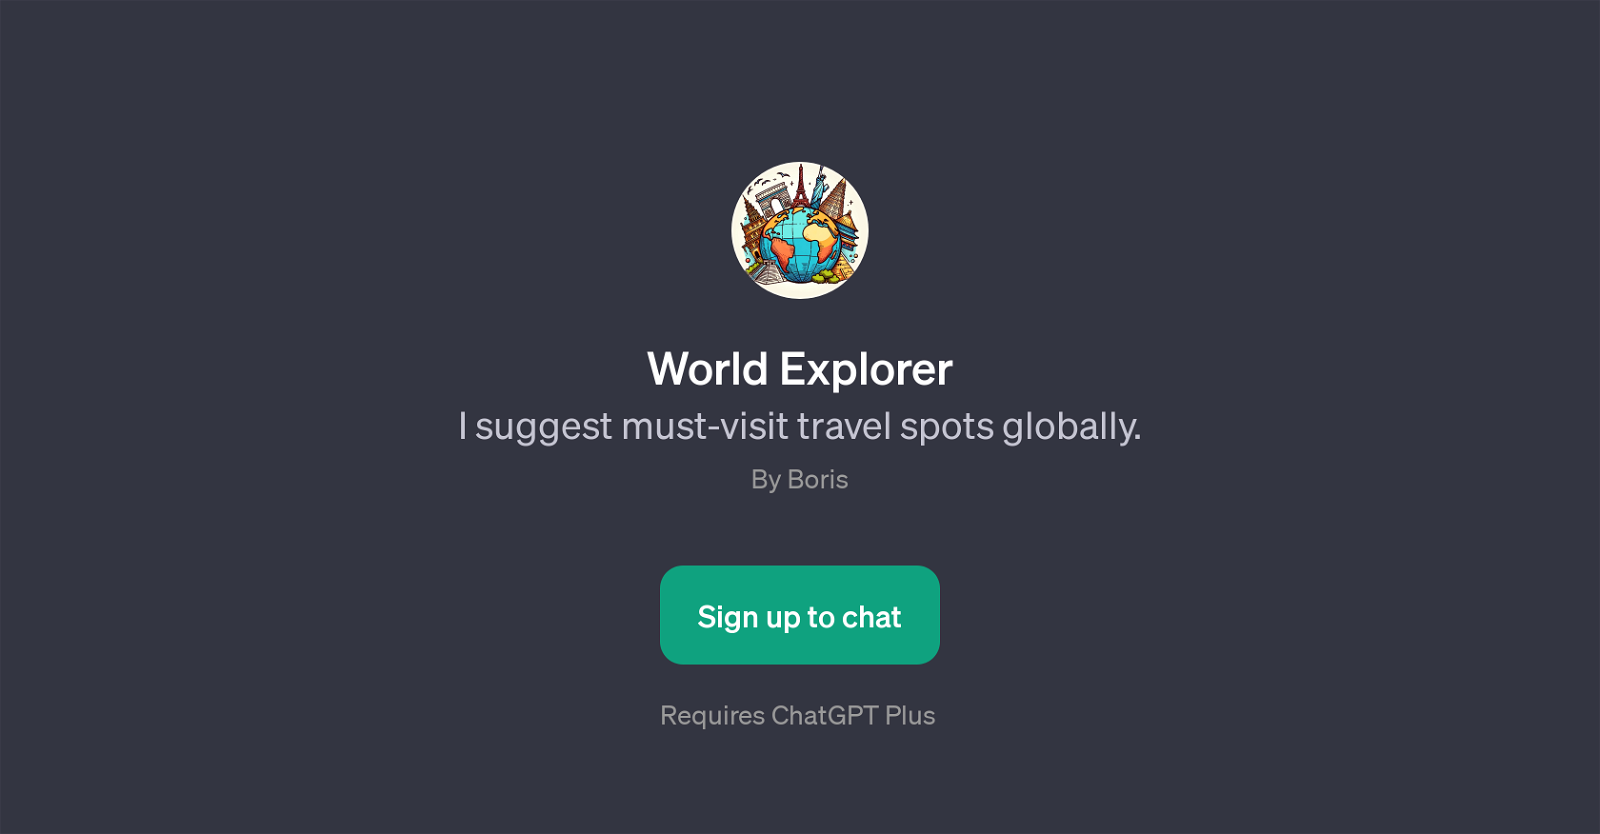 World Explorer website